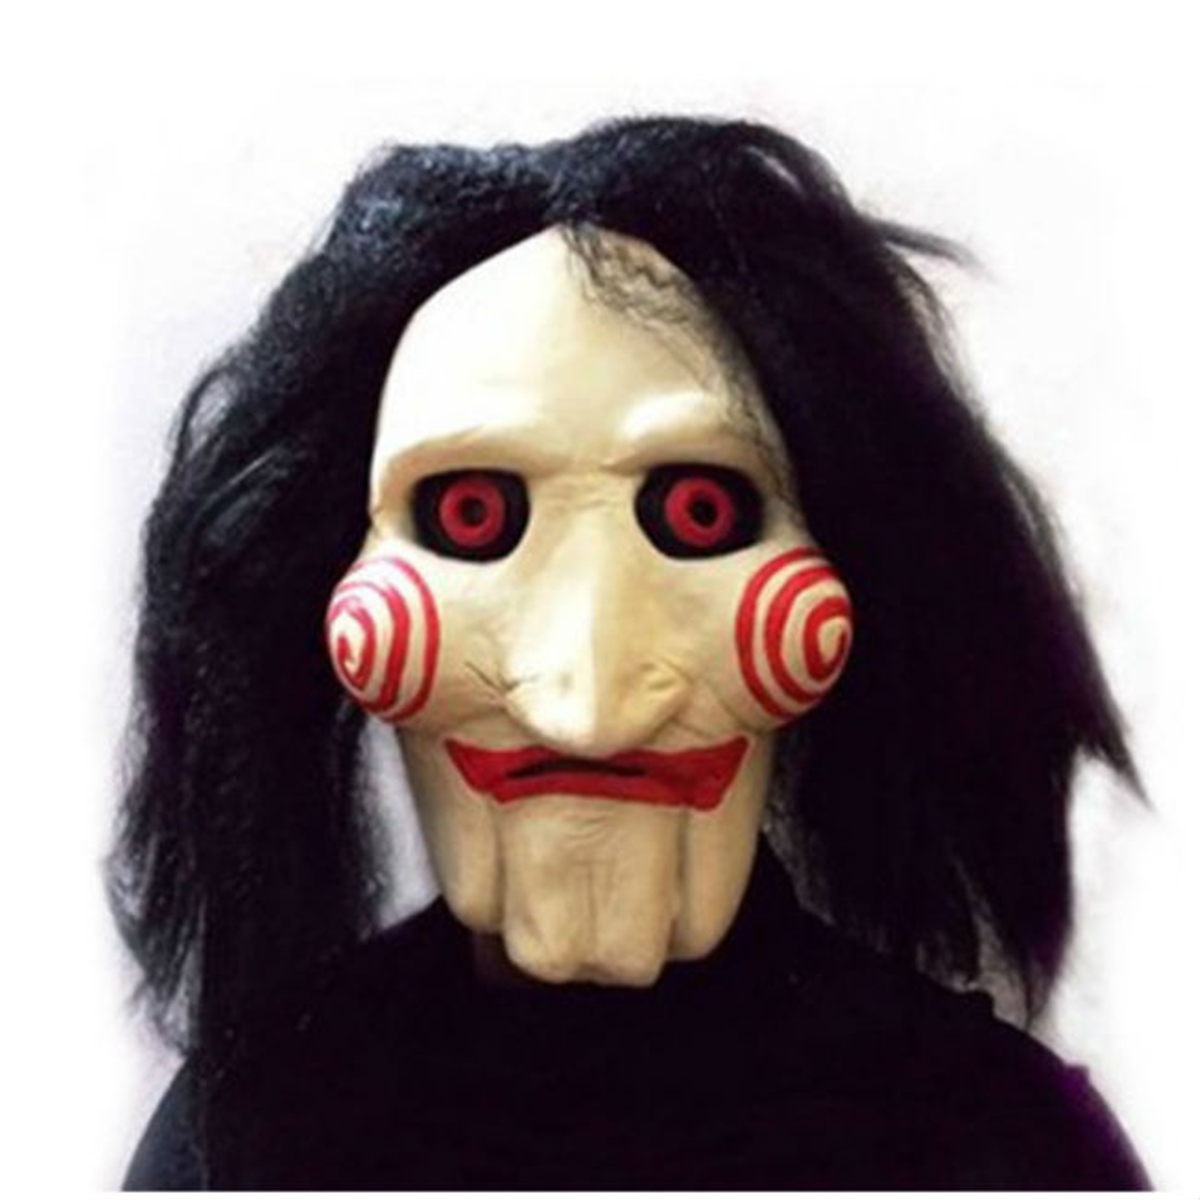 

Jigsaw Creepy Scary Halloween Clown Mask Rubber Latex Saw Horror Movie Cosplay